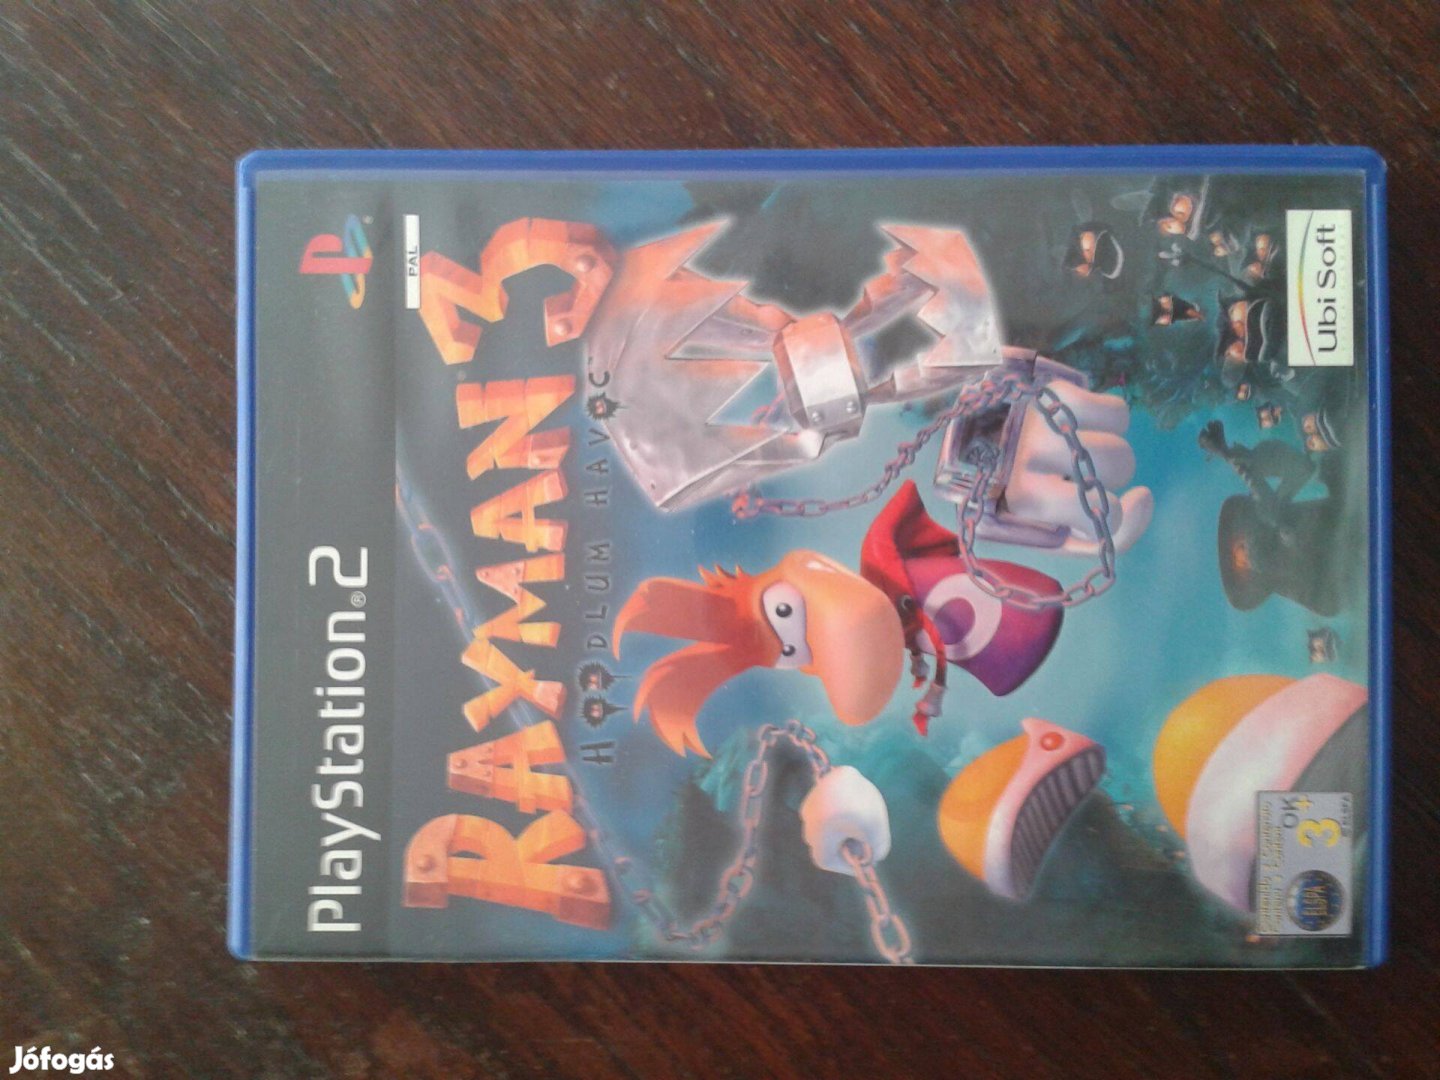 Playstation 2. Rayman 3. Hoodlum havoc